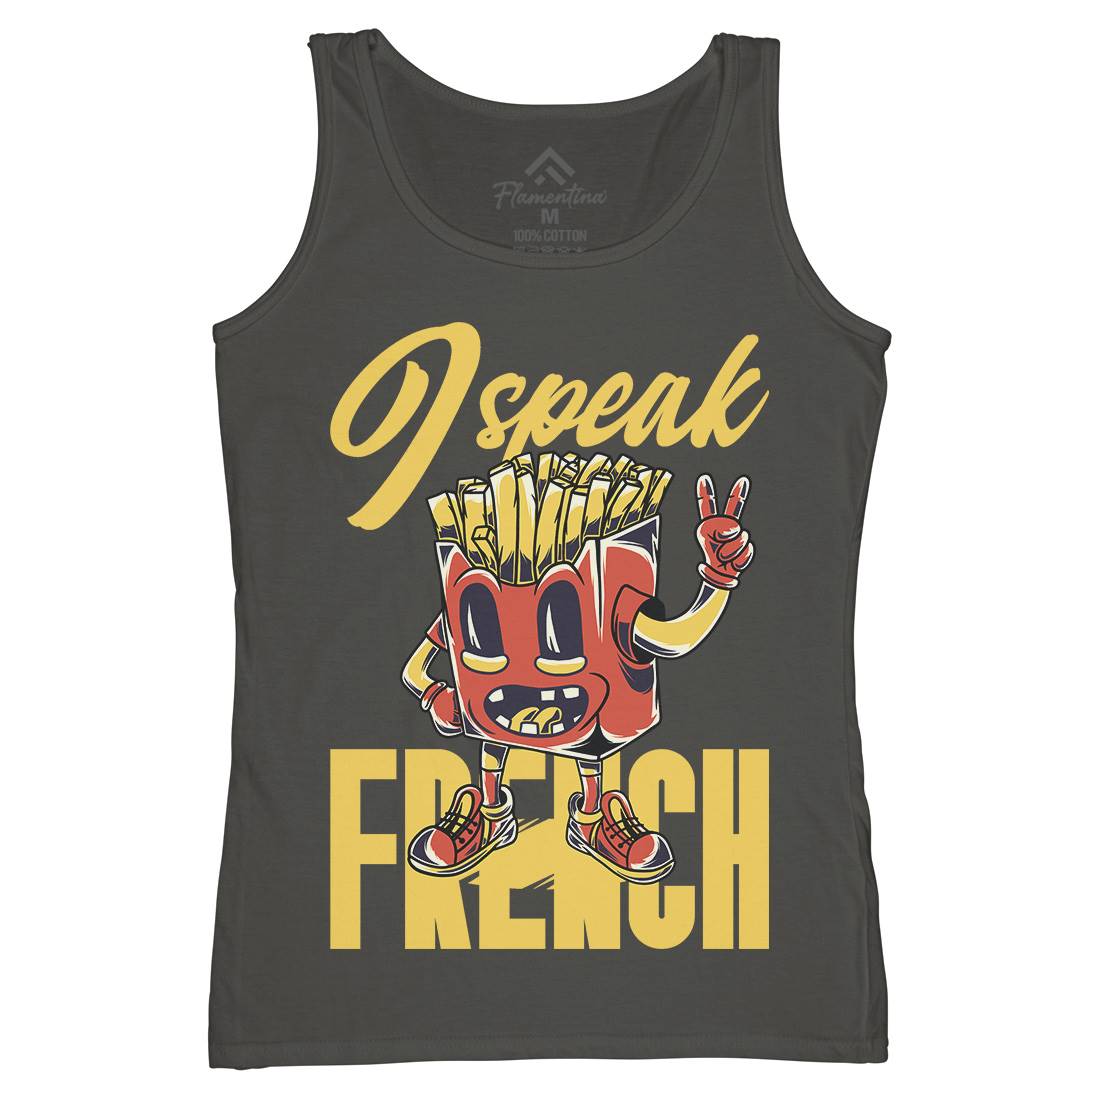 I Speak French Womens Organic Tank Top Vest Food C817